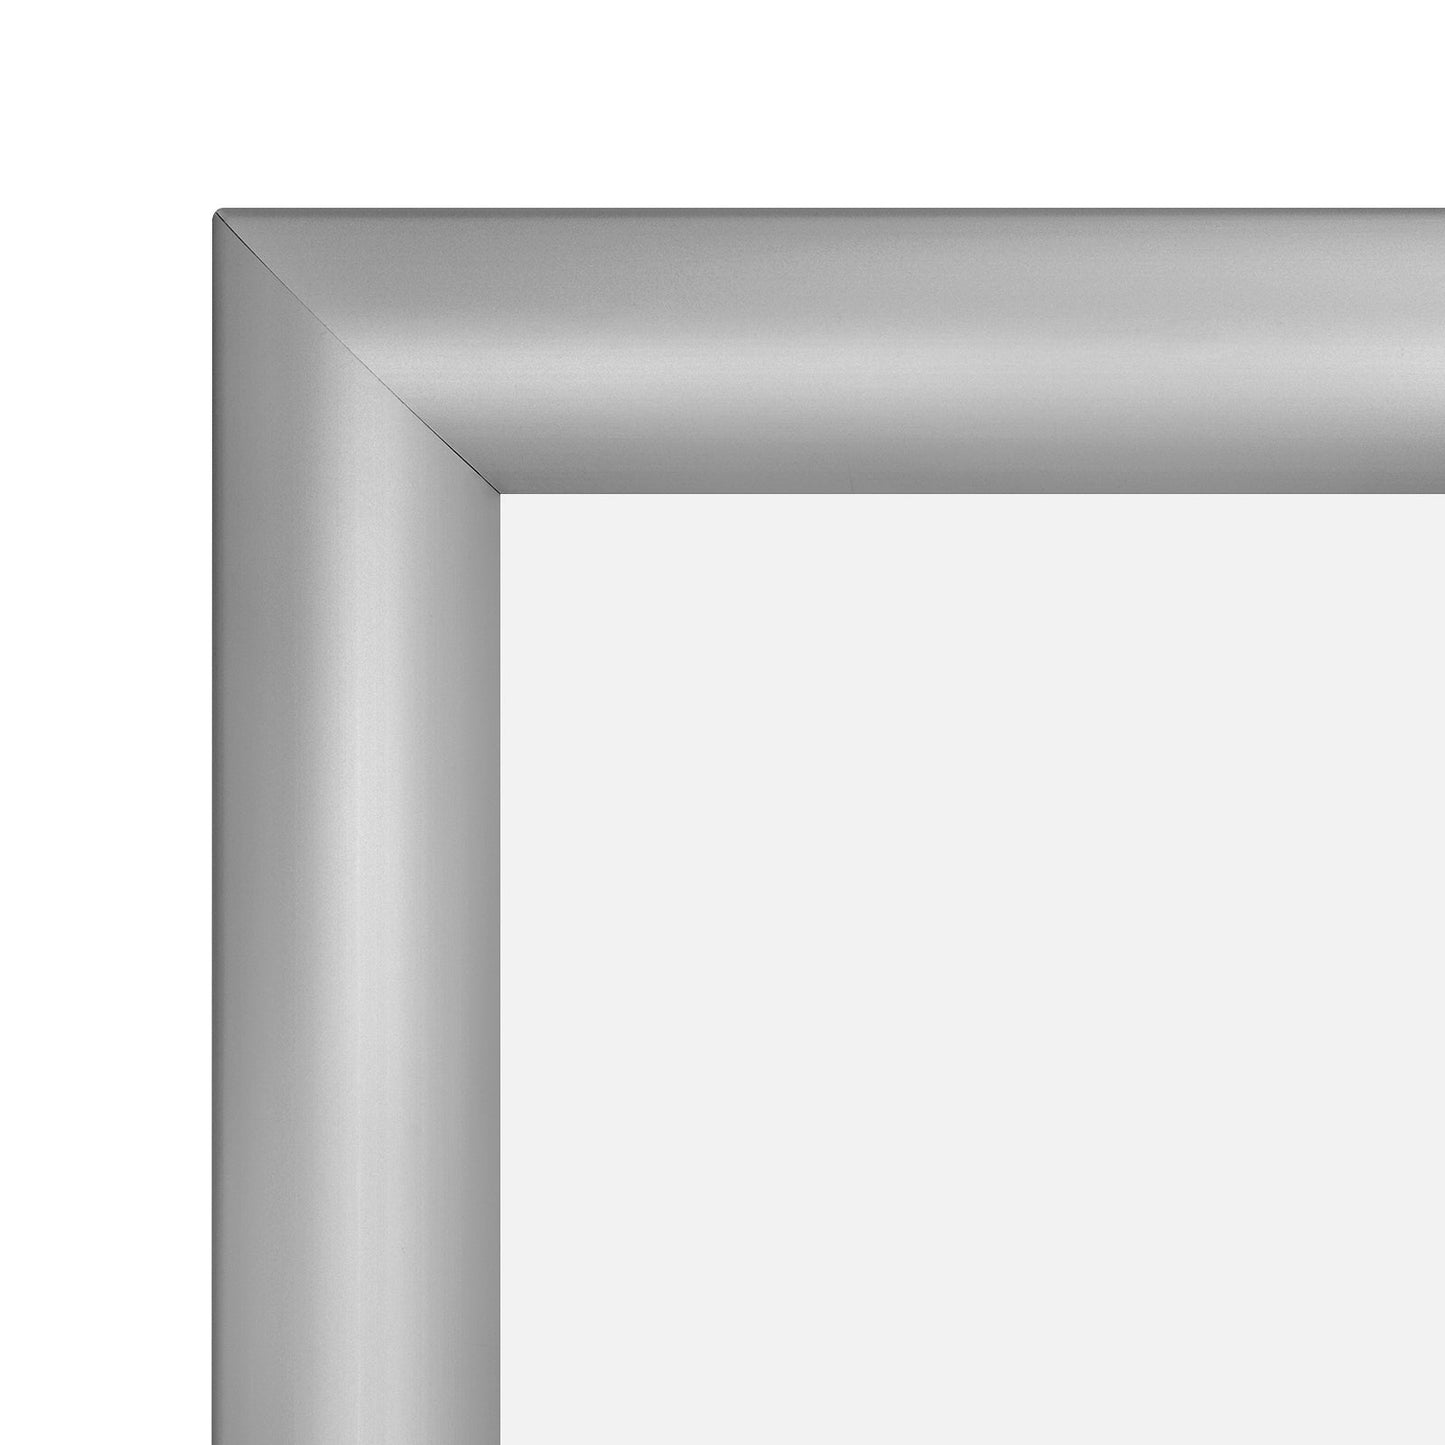 12x16 Silver SnapeZo® Snap Frame - 1.2" Profile